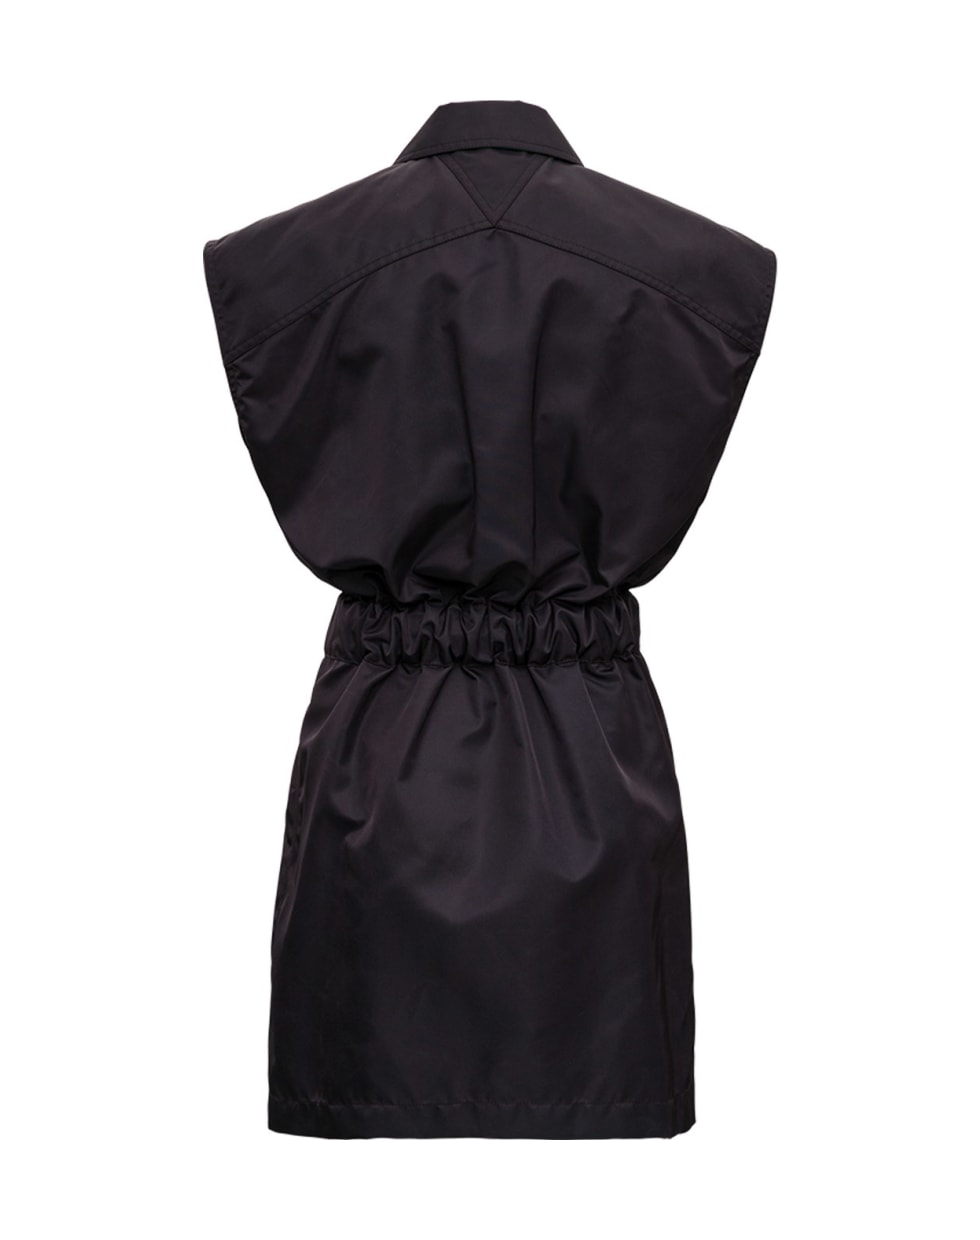 Bottega Veneta Black Technical Stretch Nylon Dress - Brown